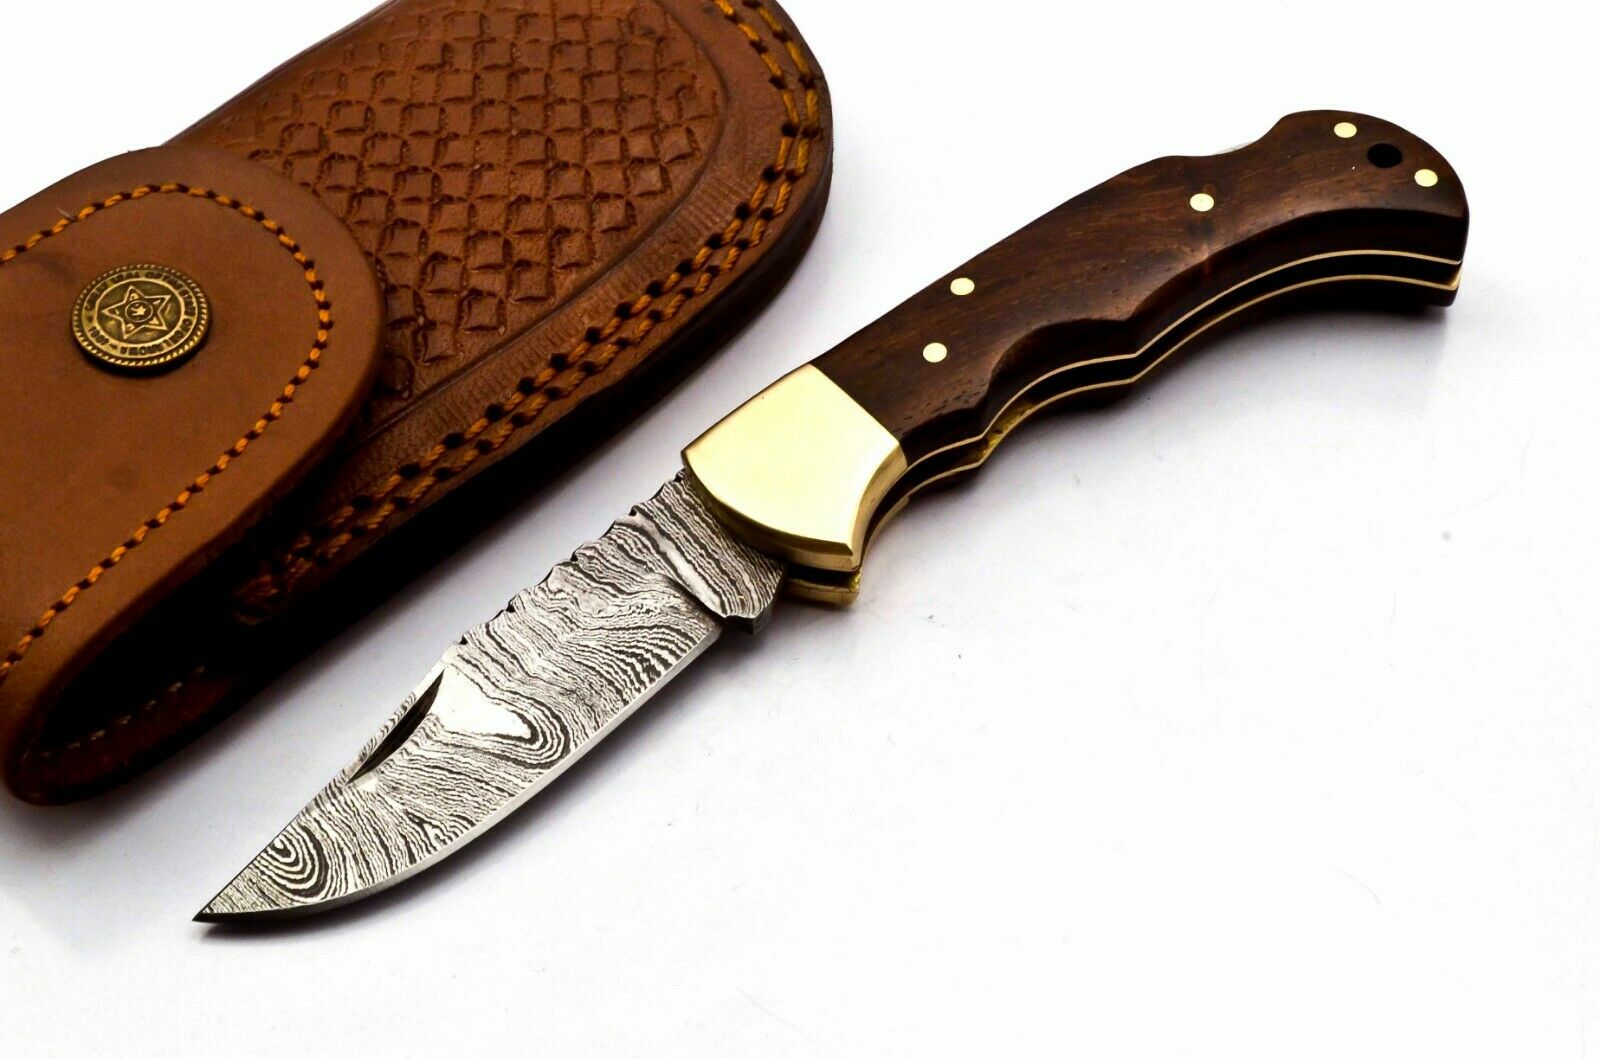 Details about   HANDMADE Damascus Steel Blade POCKET KNIFE,FOLDING KNIFE DAMASCUS STEEL HANDLE 